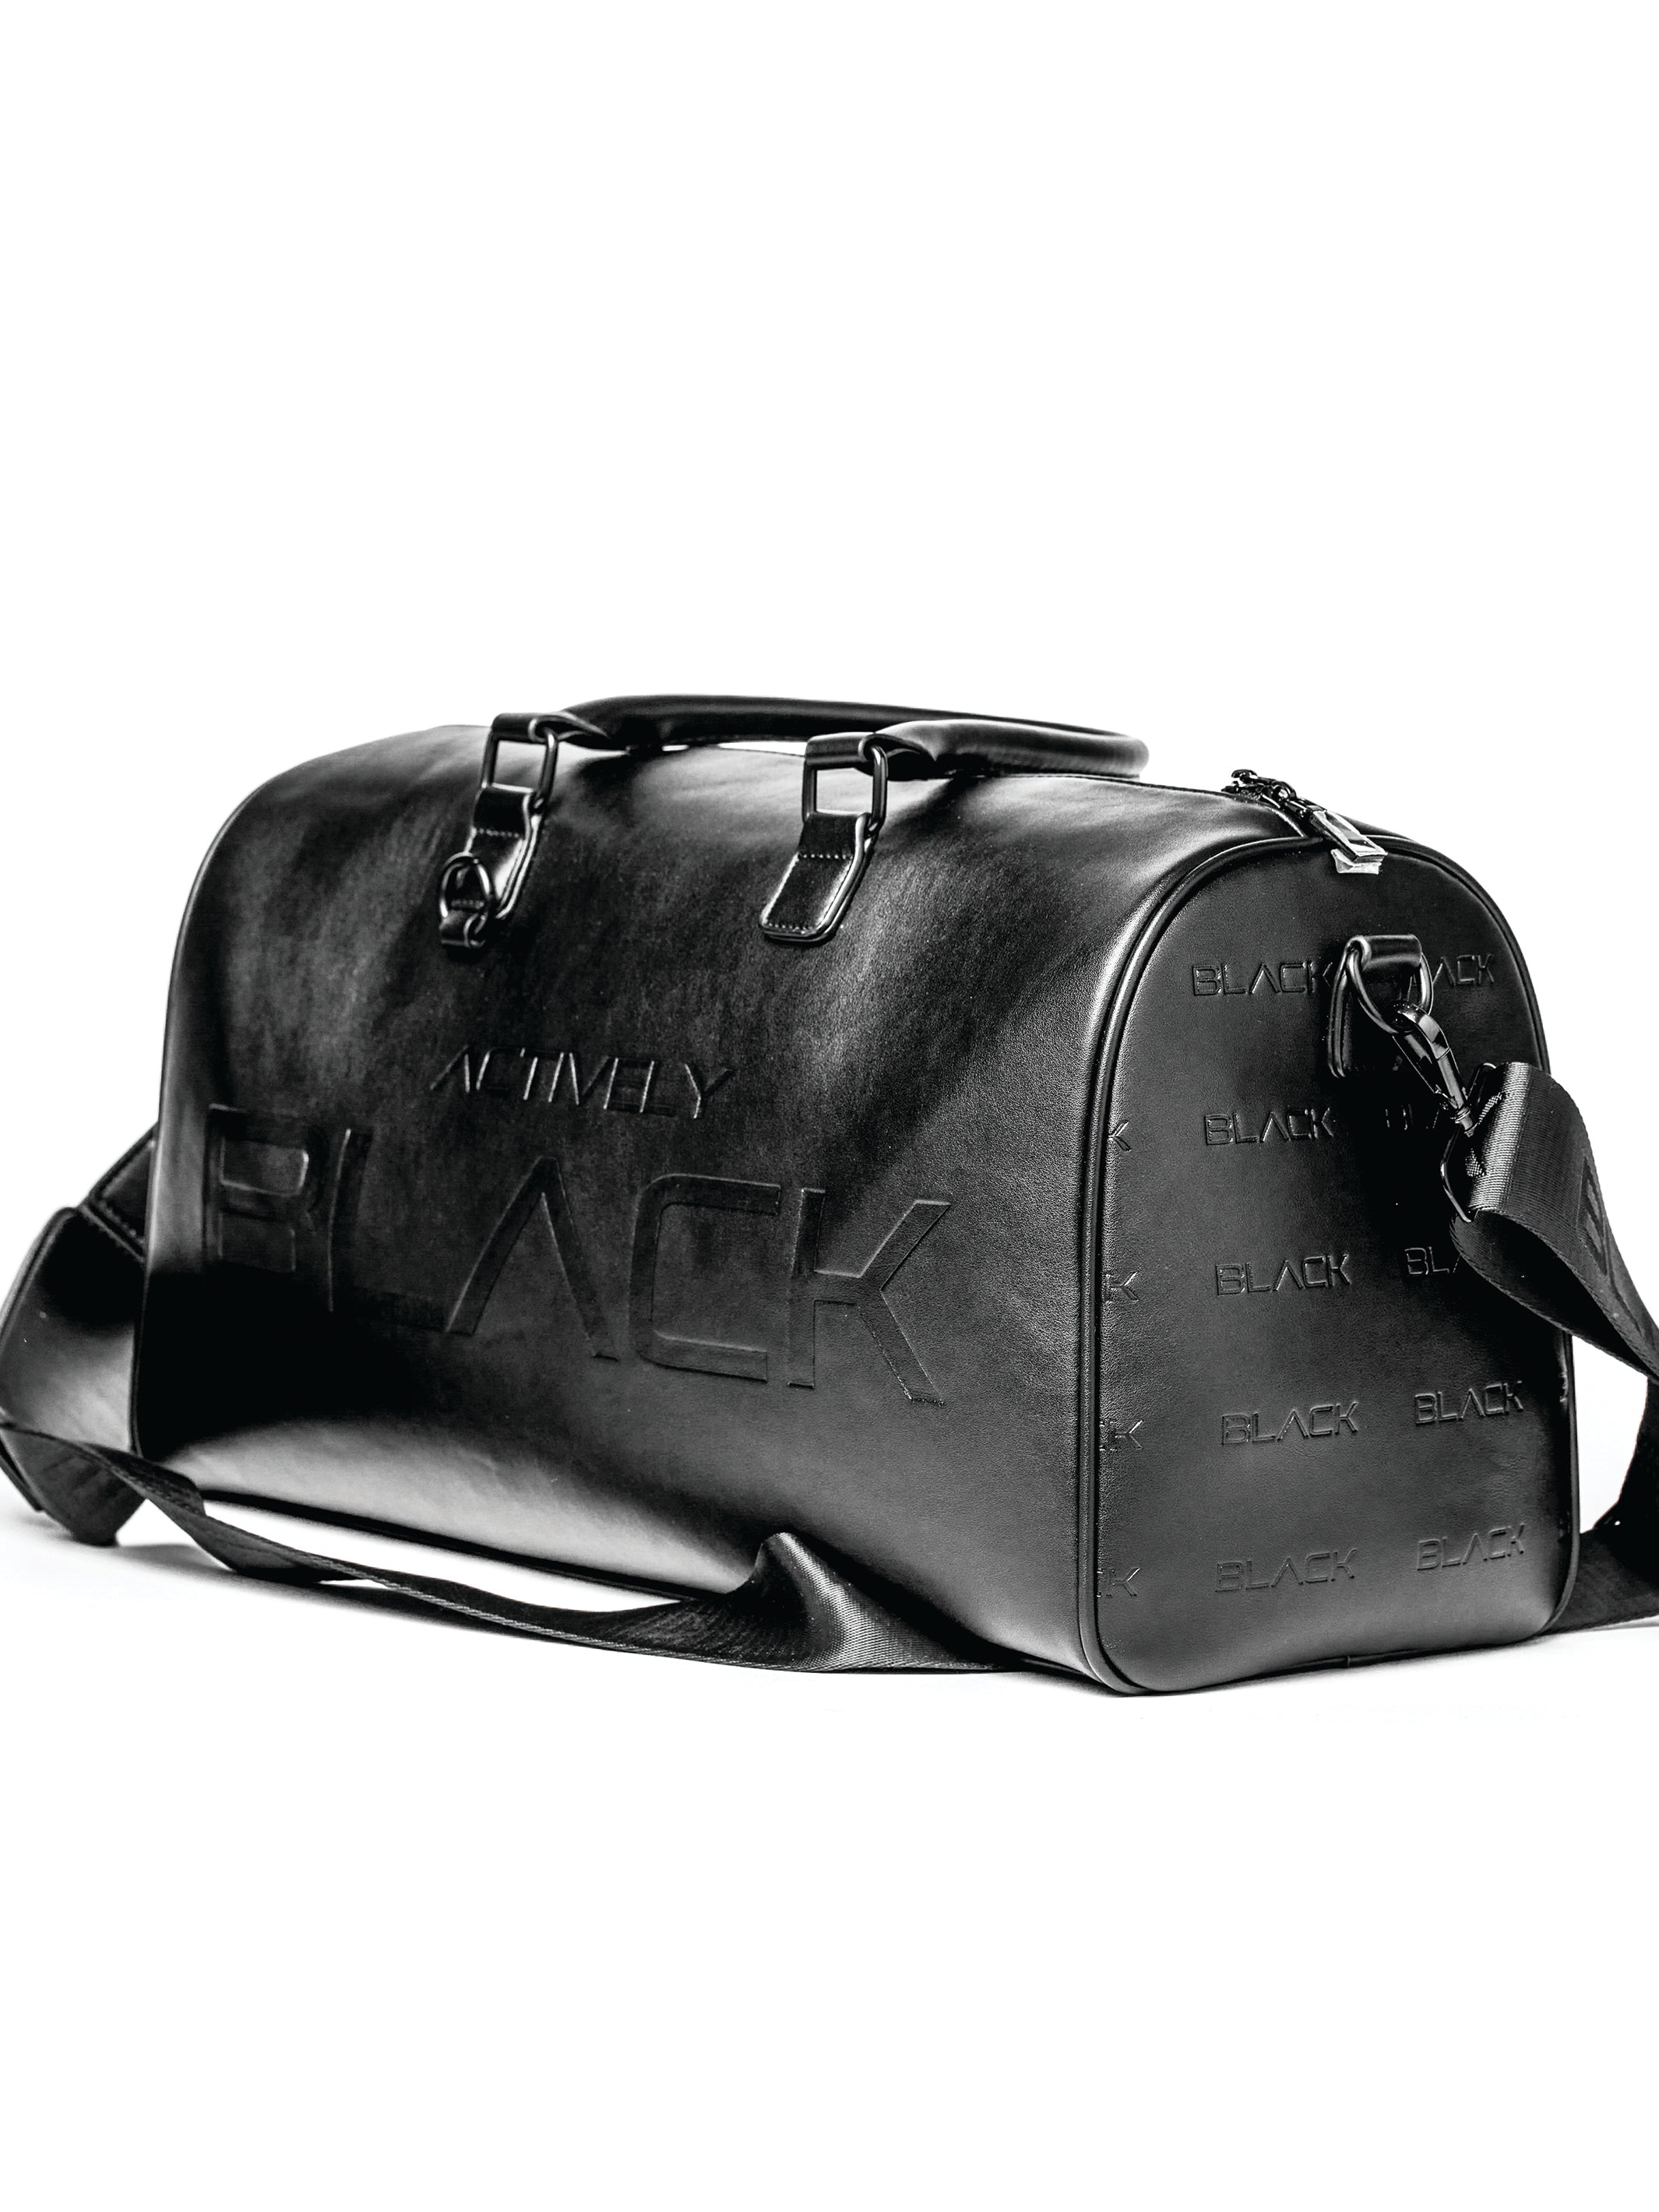 Actively Black Luxe Weekender Bag